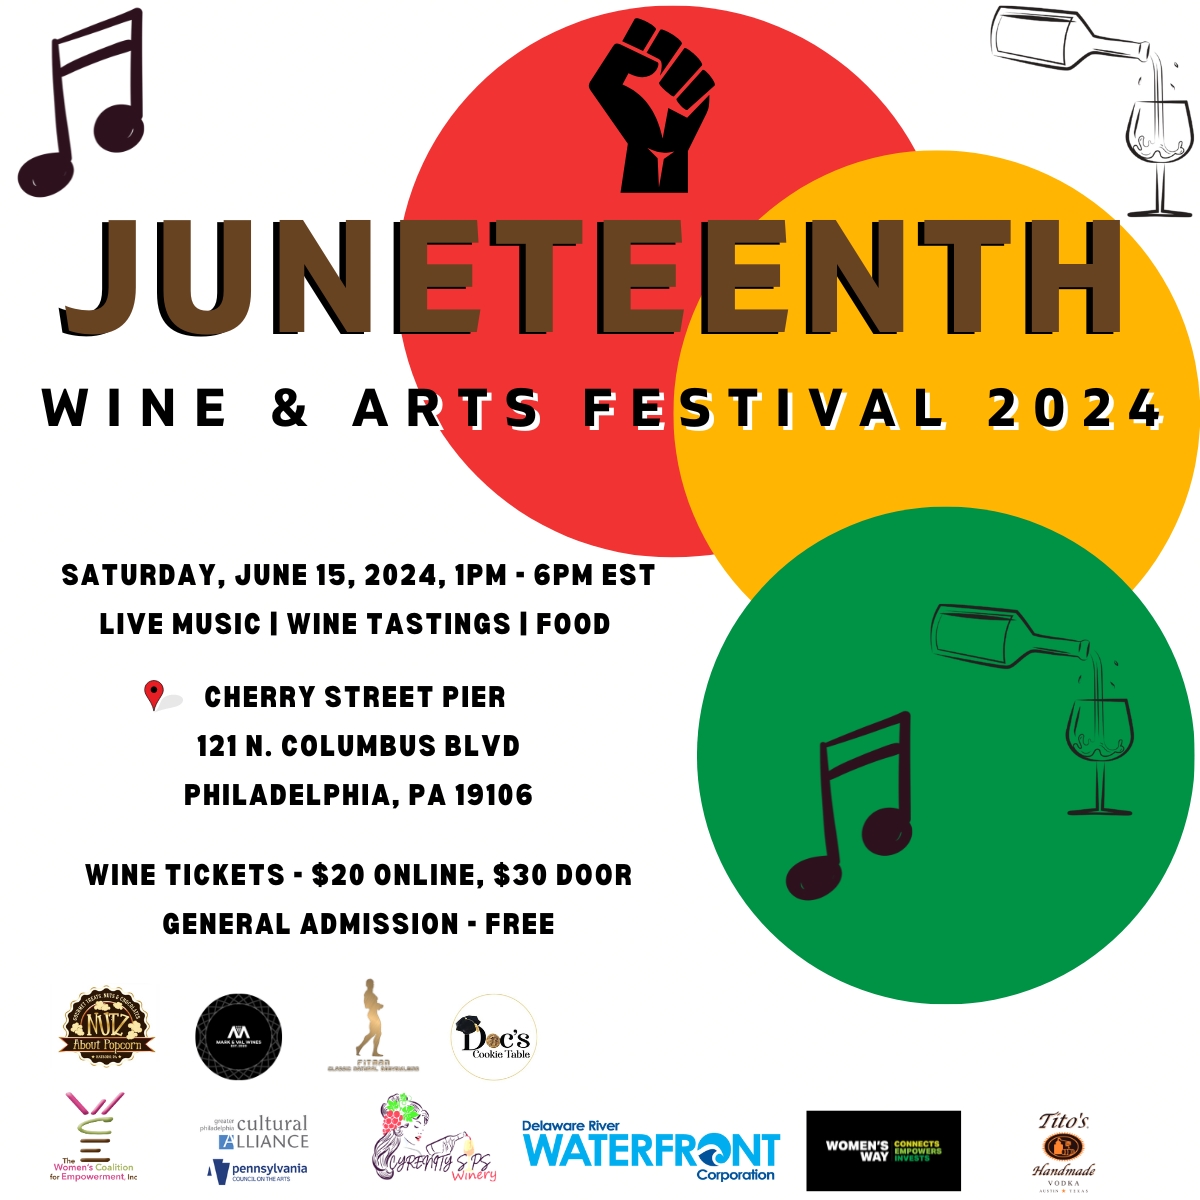 Juneteenth Wine & Arts Festival 2024